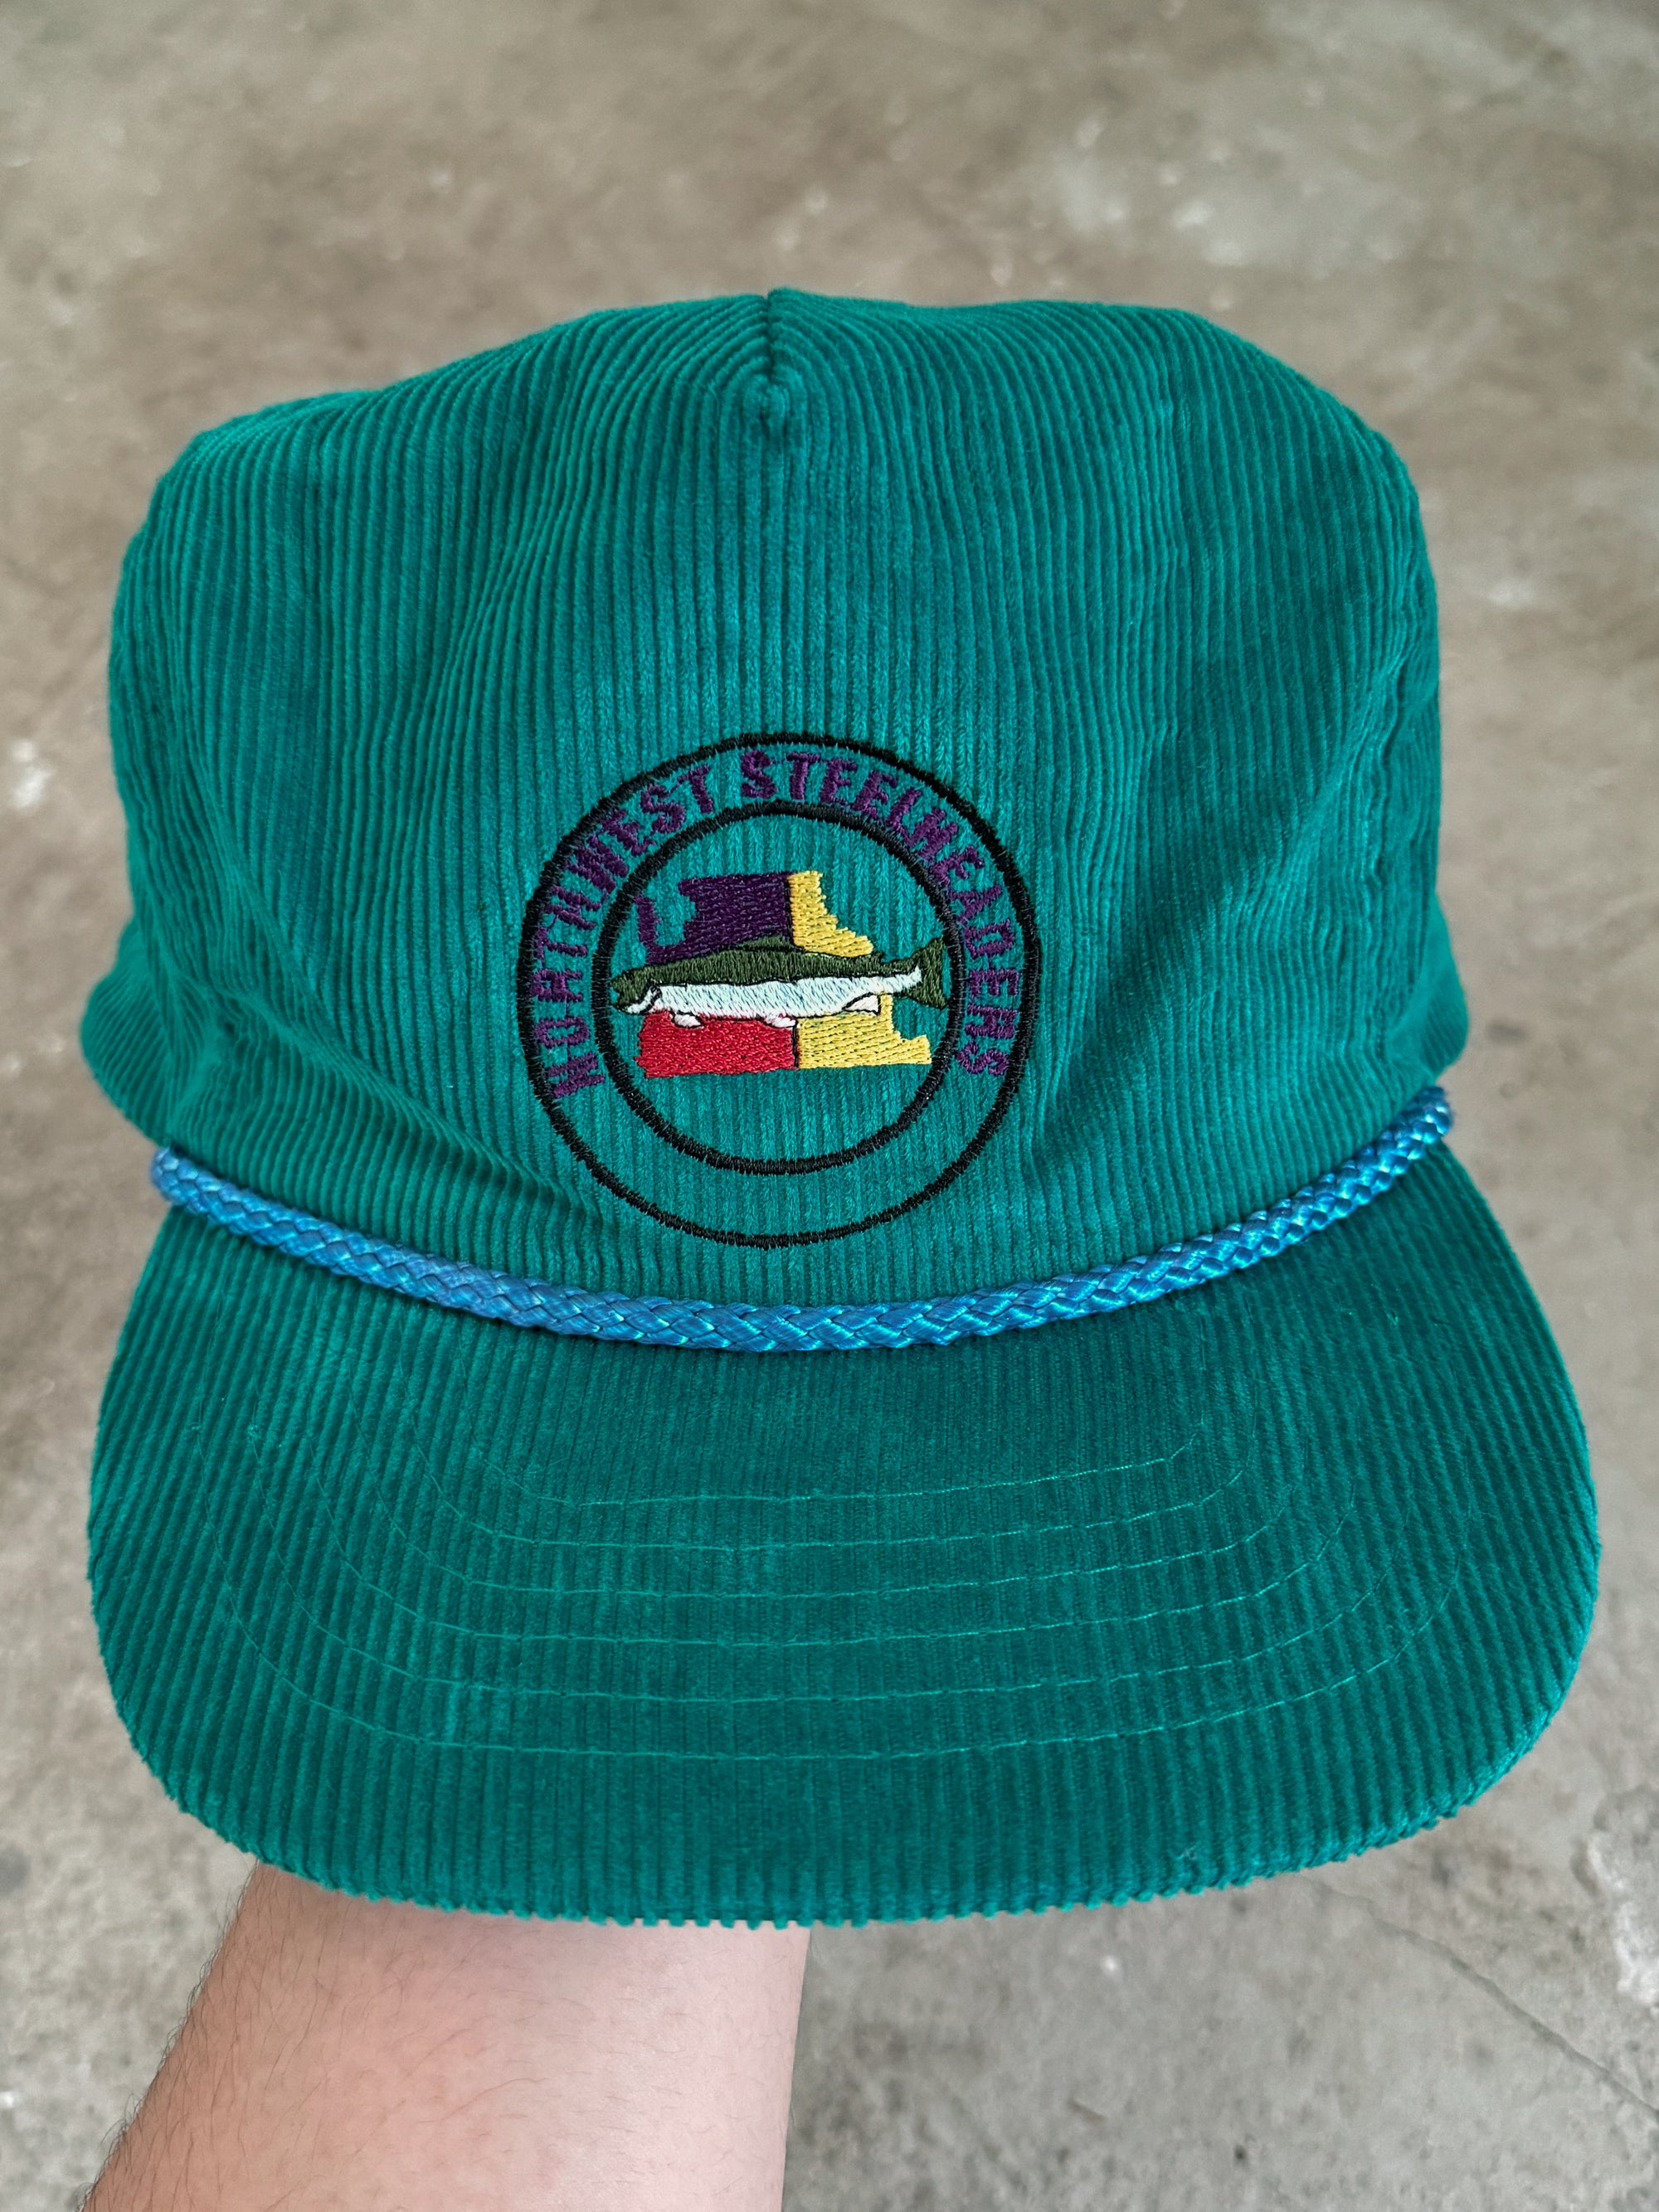 1980s/90s "Northwest Steelheaders" Corduroy Trucker Hat